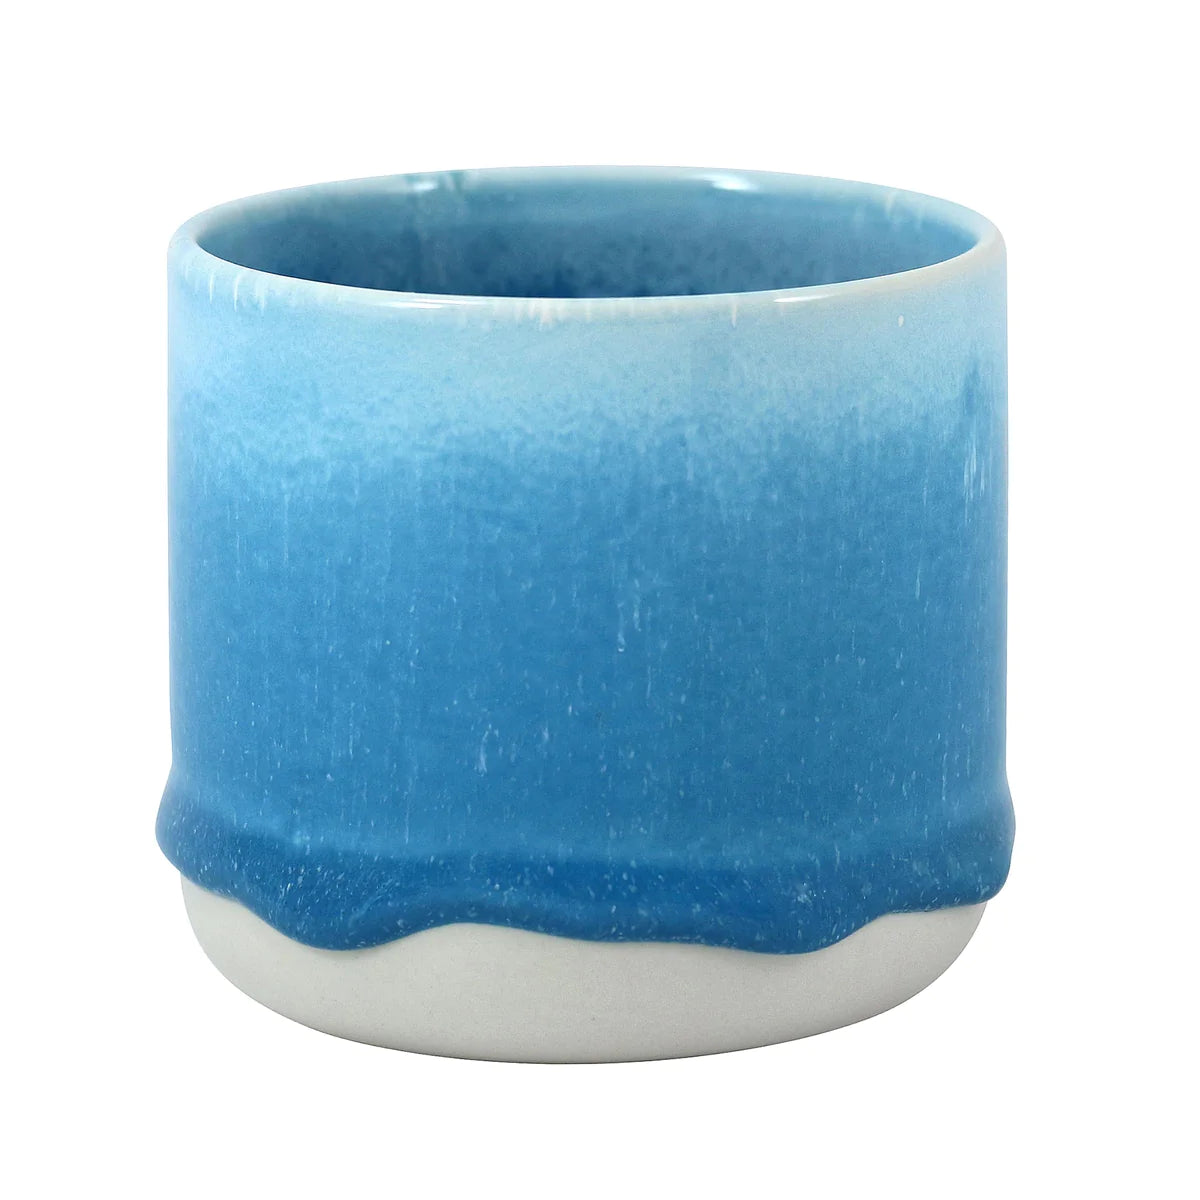 Quench Cup | Blue Sea | by Studio Arhoj - Lifestory